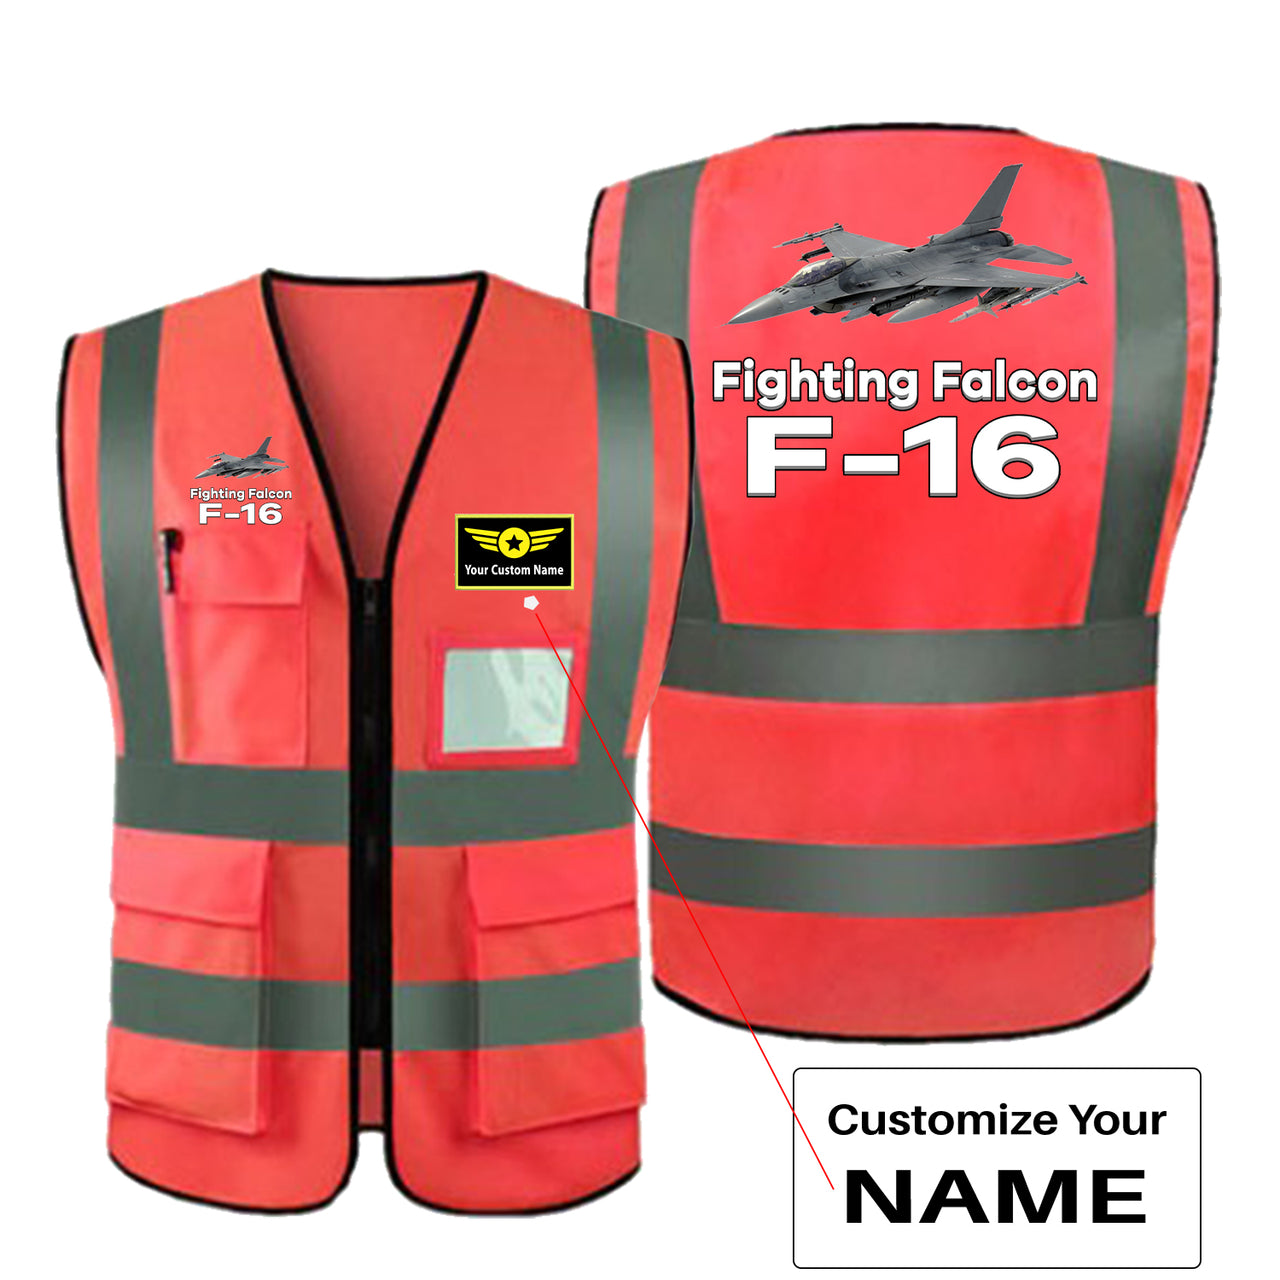 The Fighting Falcon F16 Designed Reflective Vests